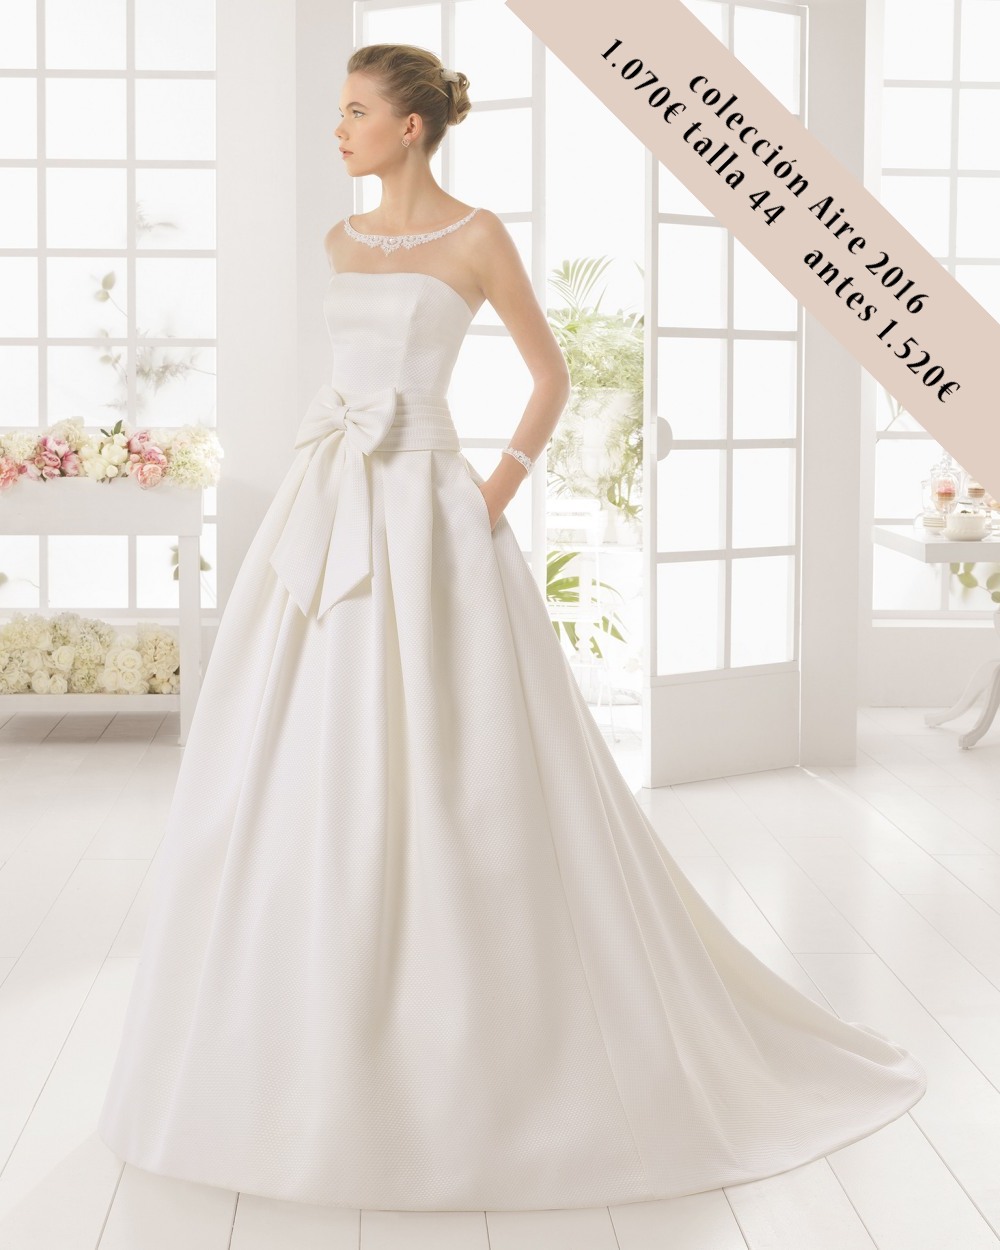 montar Mansedumbre leninismo Catálogo de vestidos de novia outlet | Valdespastor